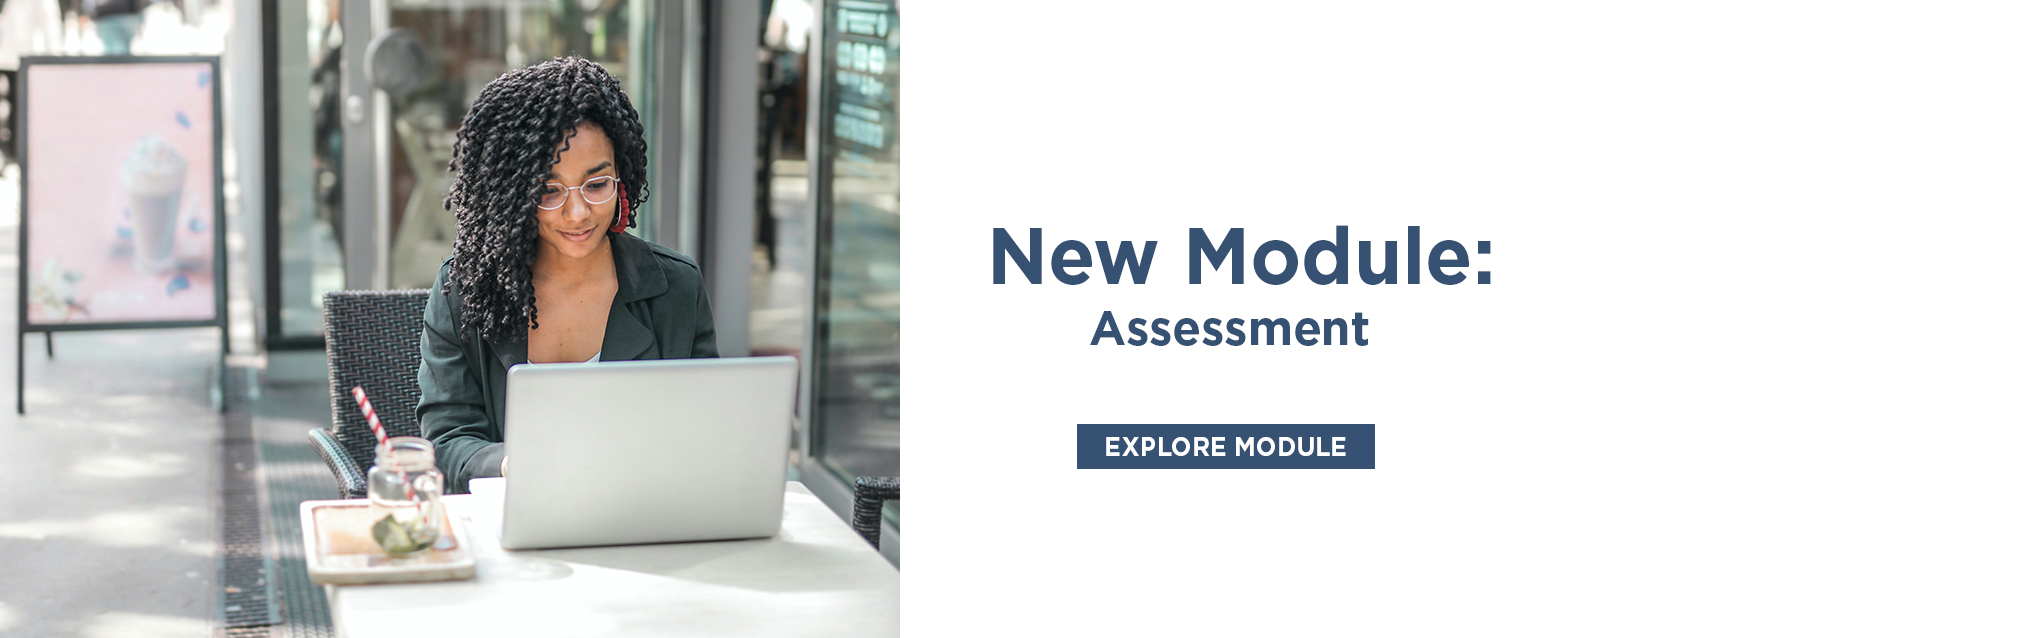 New Module: Assessment